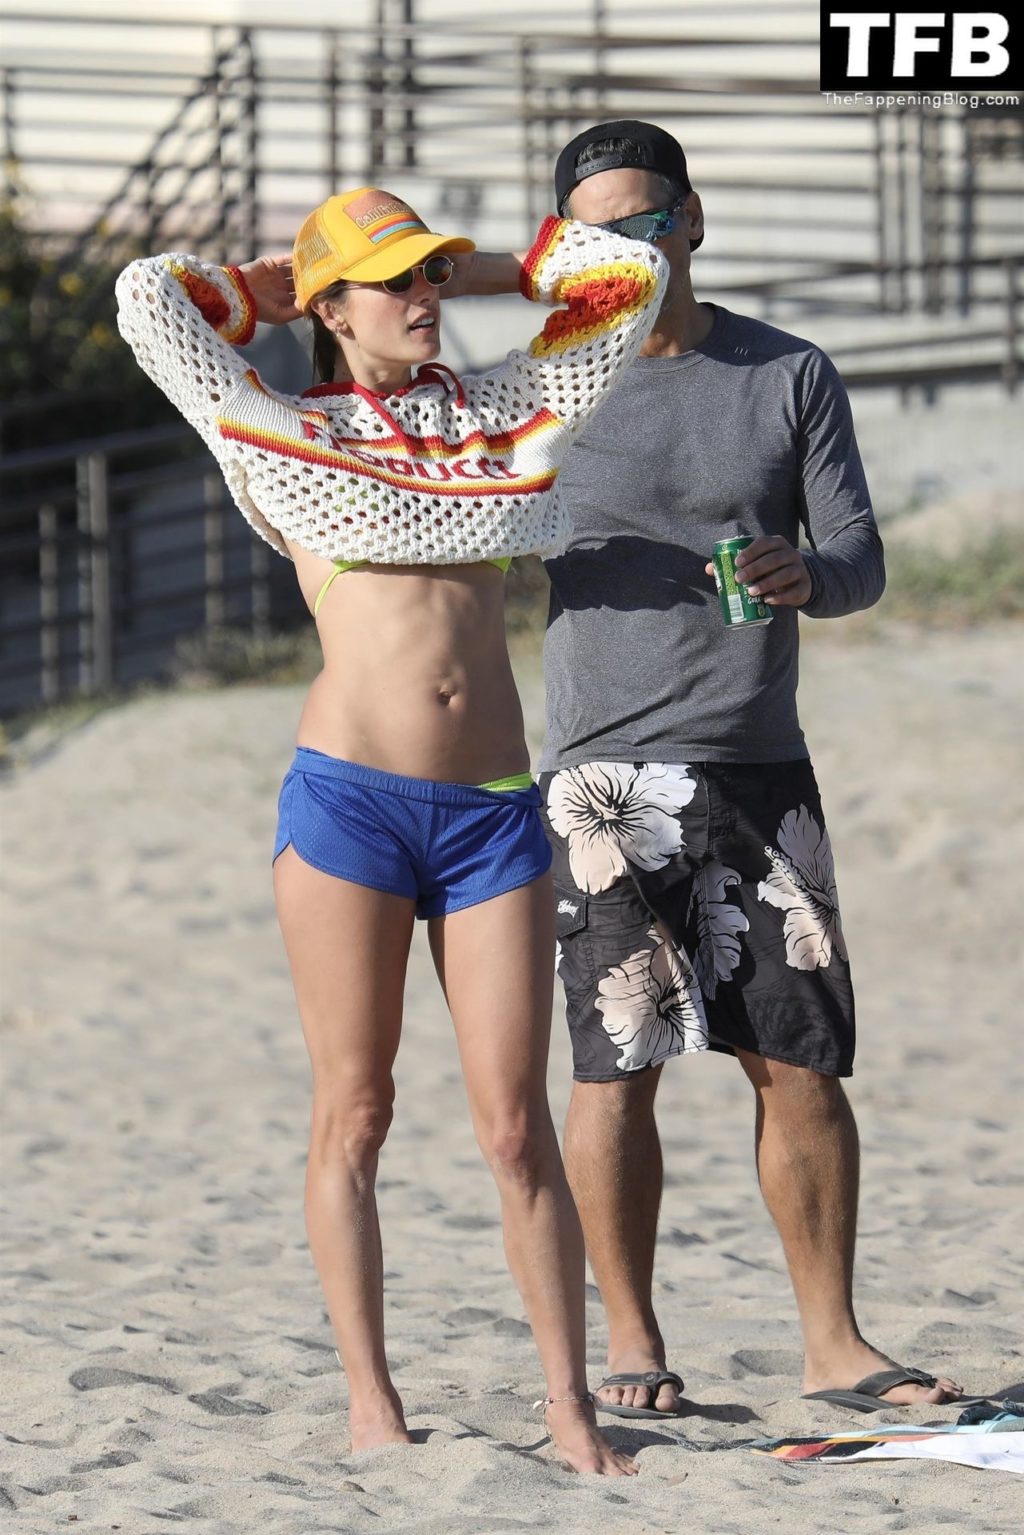 Alessandra Ambrosio Serves Up Beach Body in a Yellow Bikini While Out in Malibu (124 Photos)